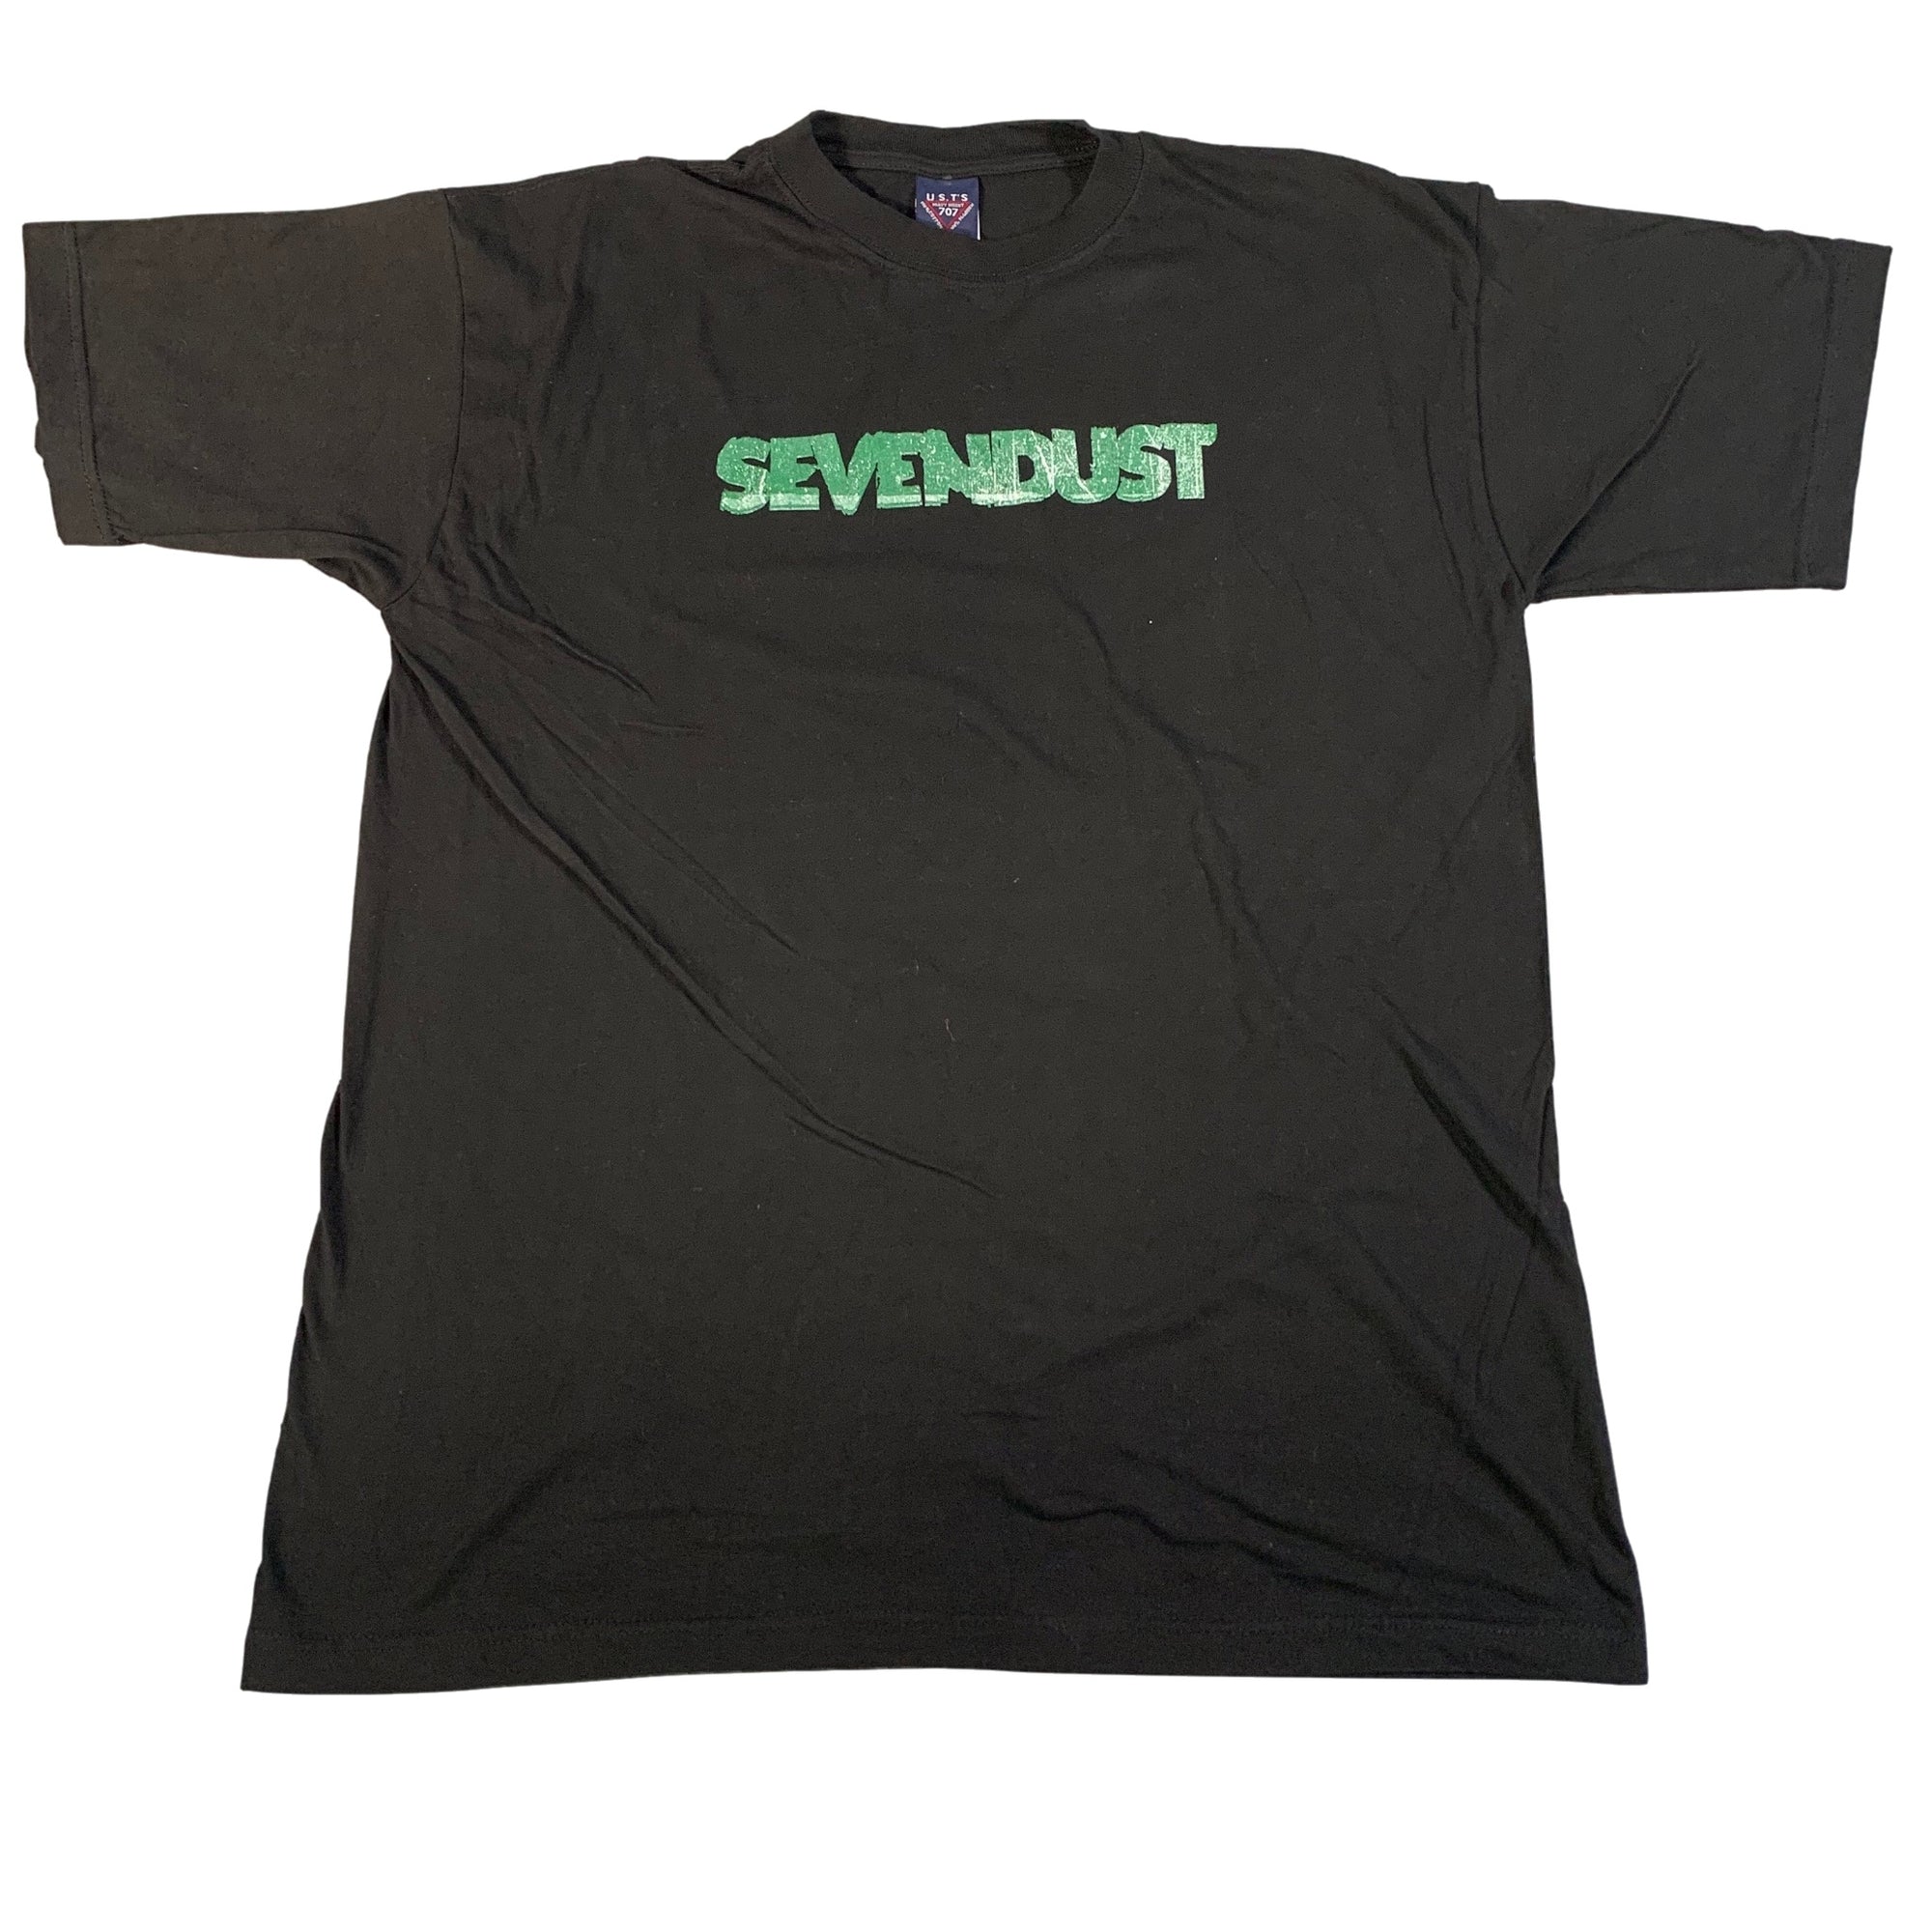 Vintage Sevendust "Seasons" T-Shirt - jointcustodydc